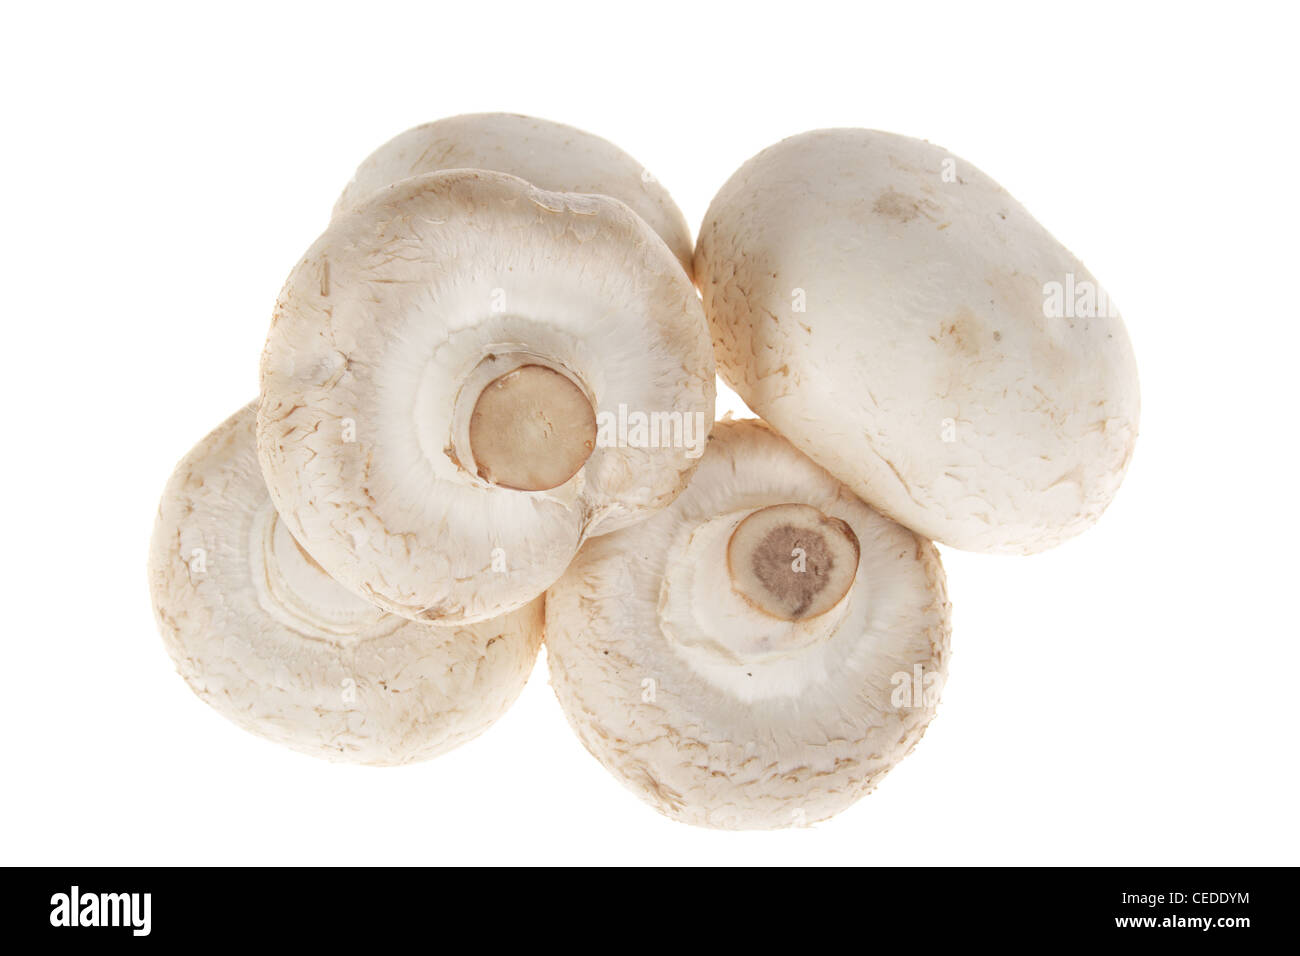 Button mushrooms photo on the white background Stock Photo